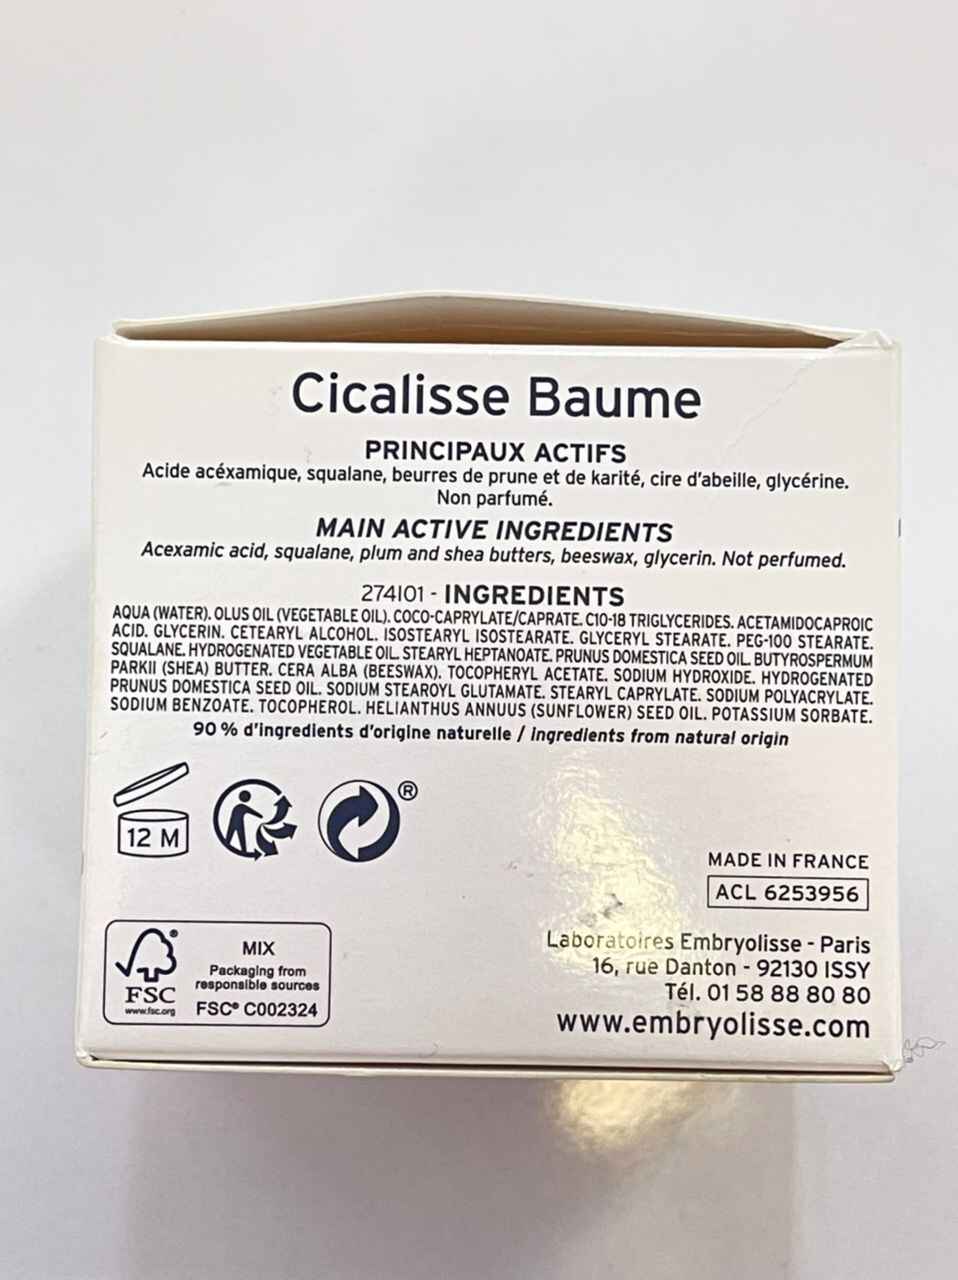 بالم ترمیم کننده سیکالیس امبریولیس Embryolisse Cicalisse (فروش ویژه) حجم 40 گرم | پوست حساس و آسیب دیده